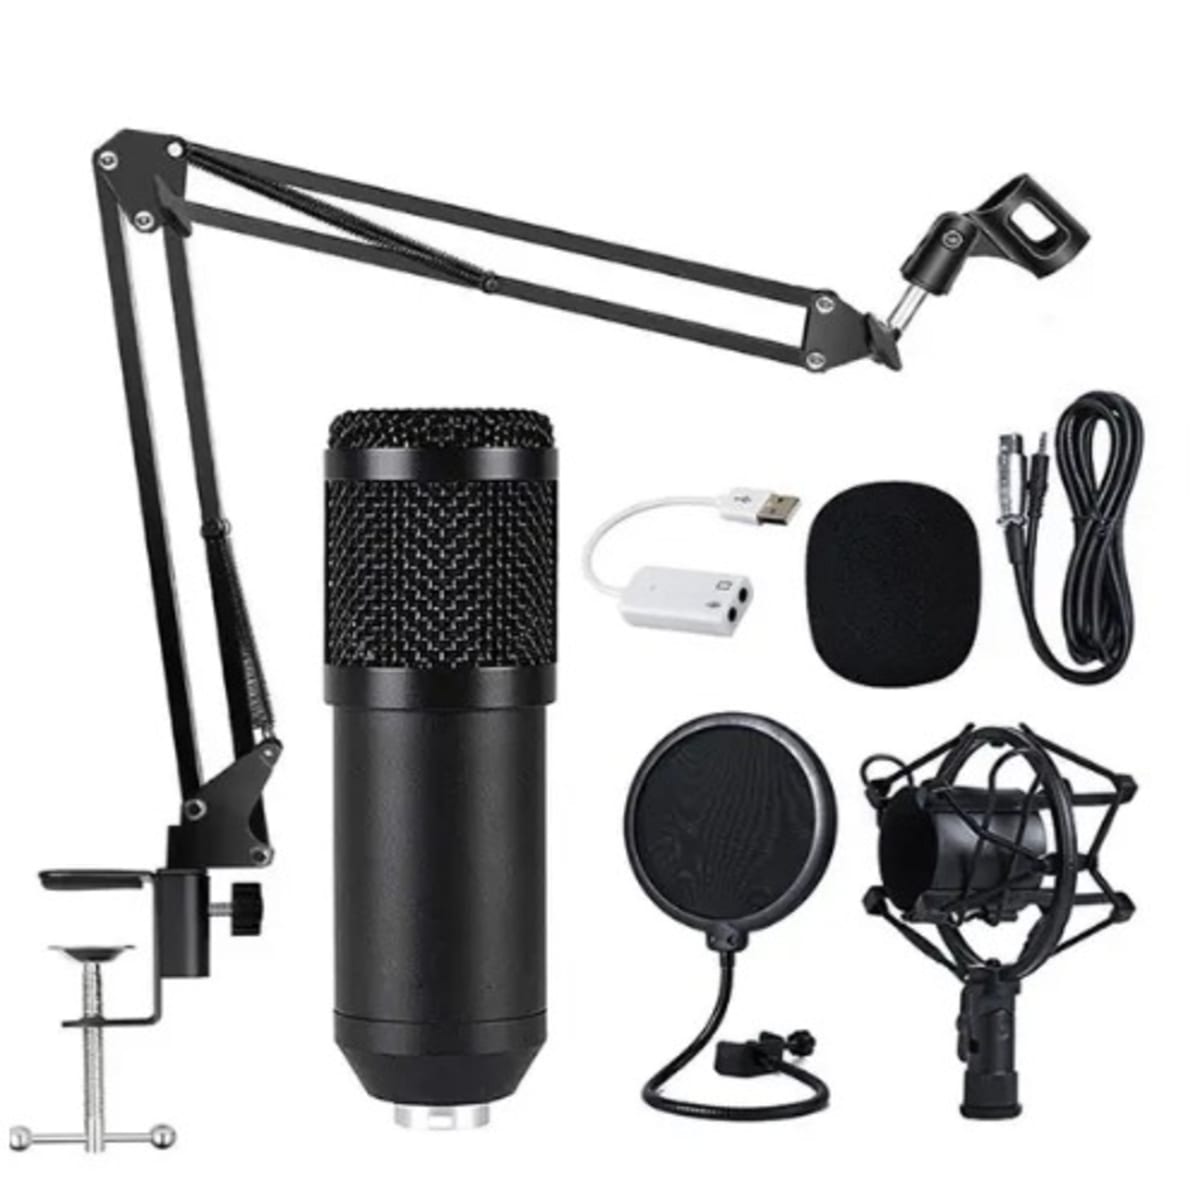  BM-800 Microphone Studio Recording Kits Condenser